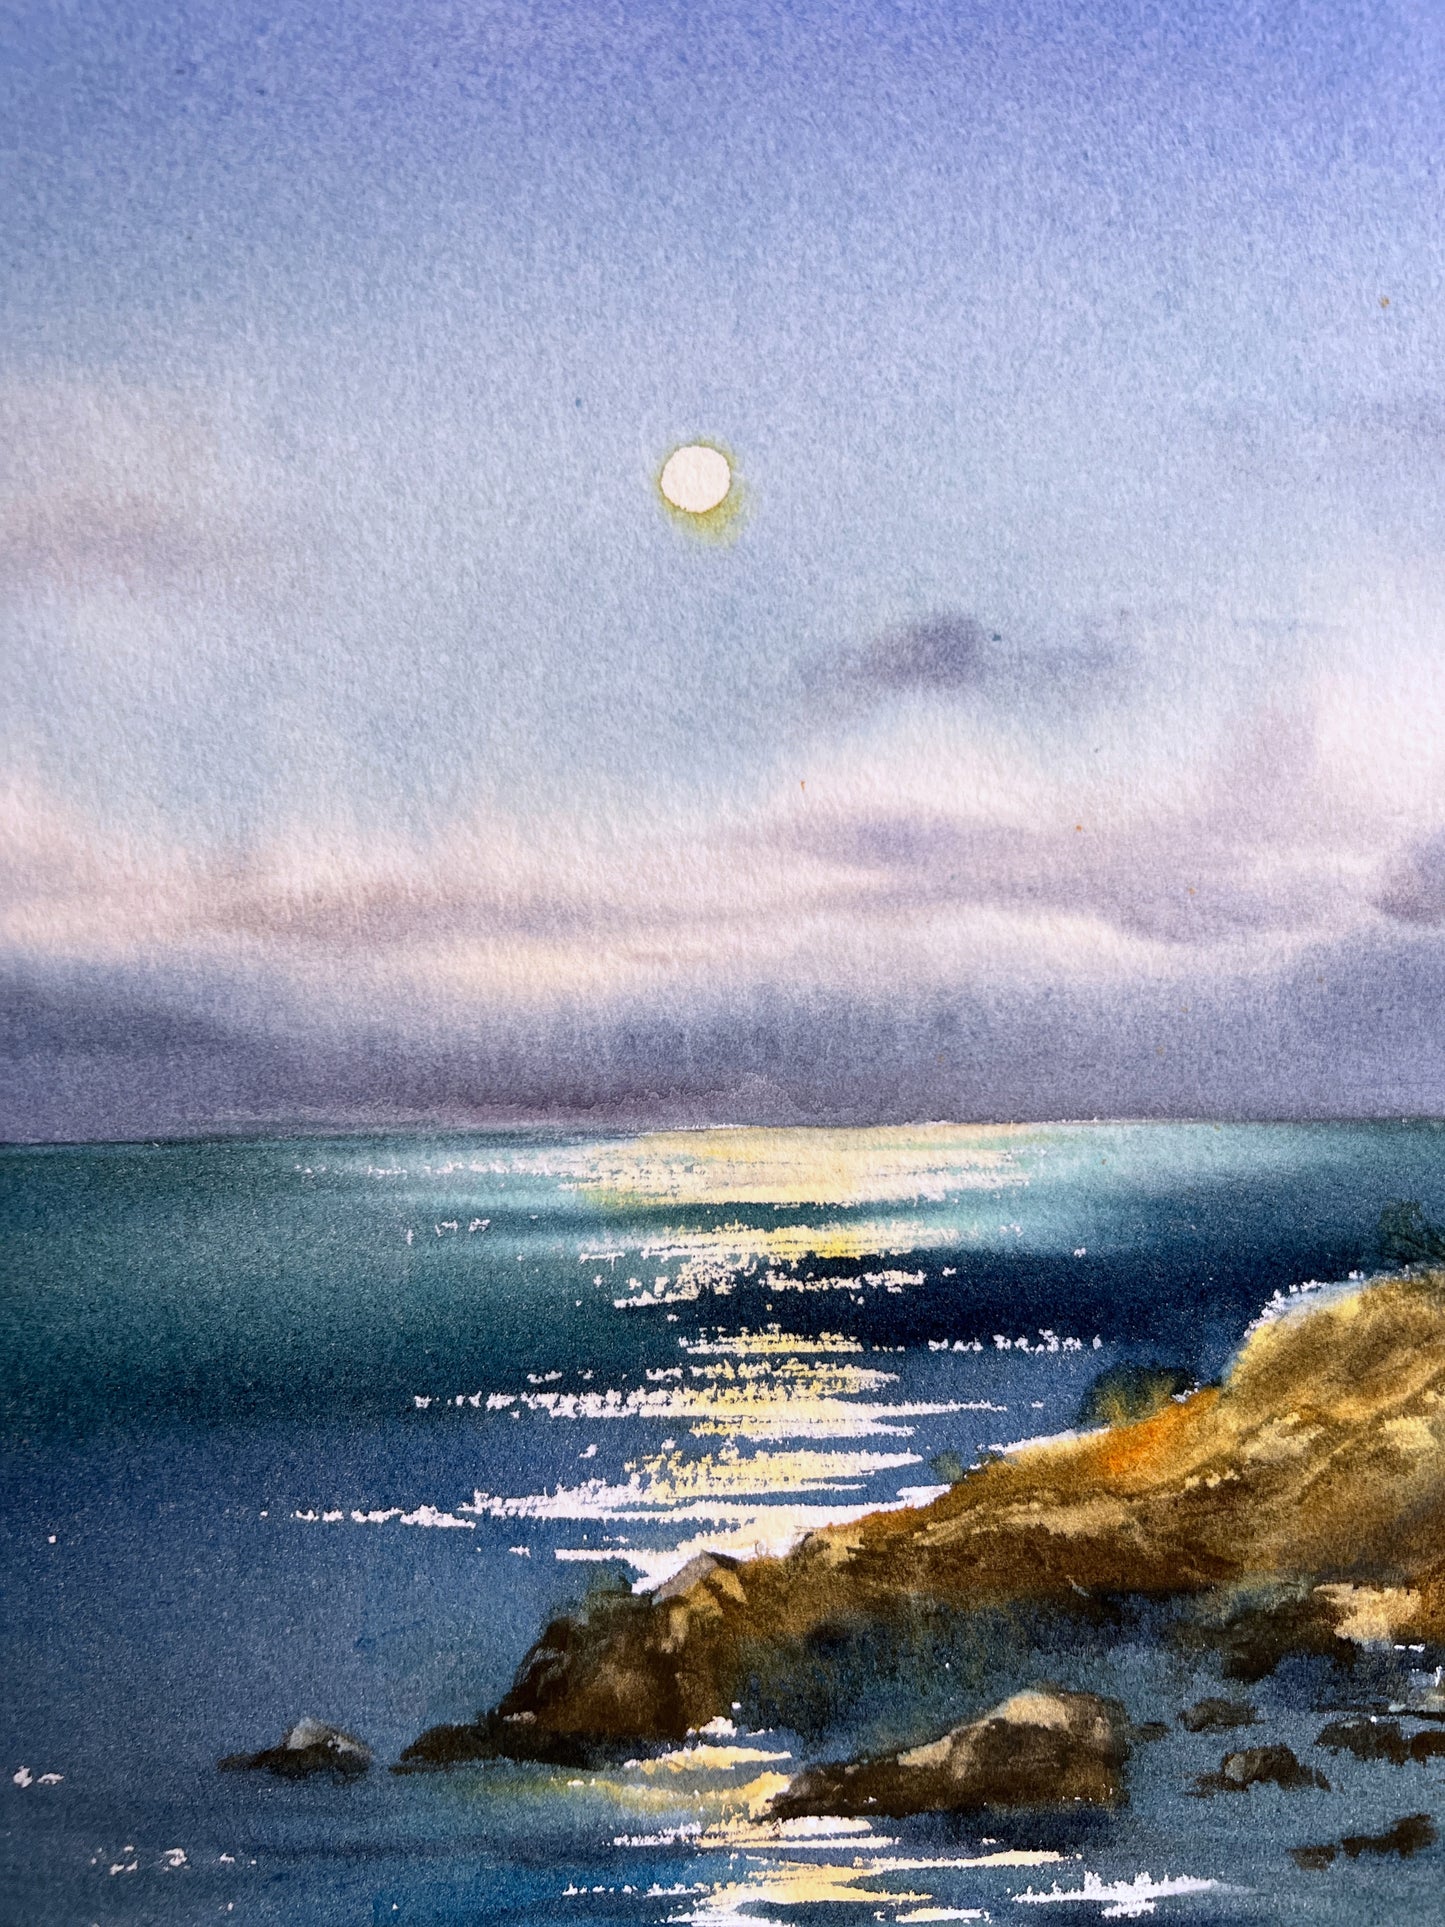 Coastal Painting Original, Watercolor Artwork - Full moon #3